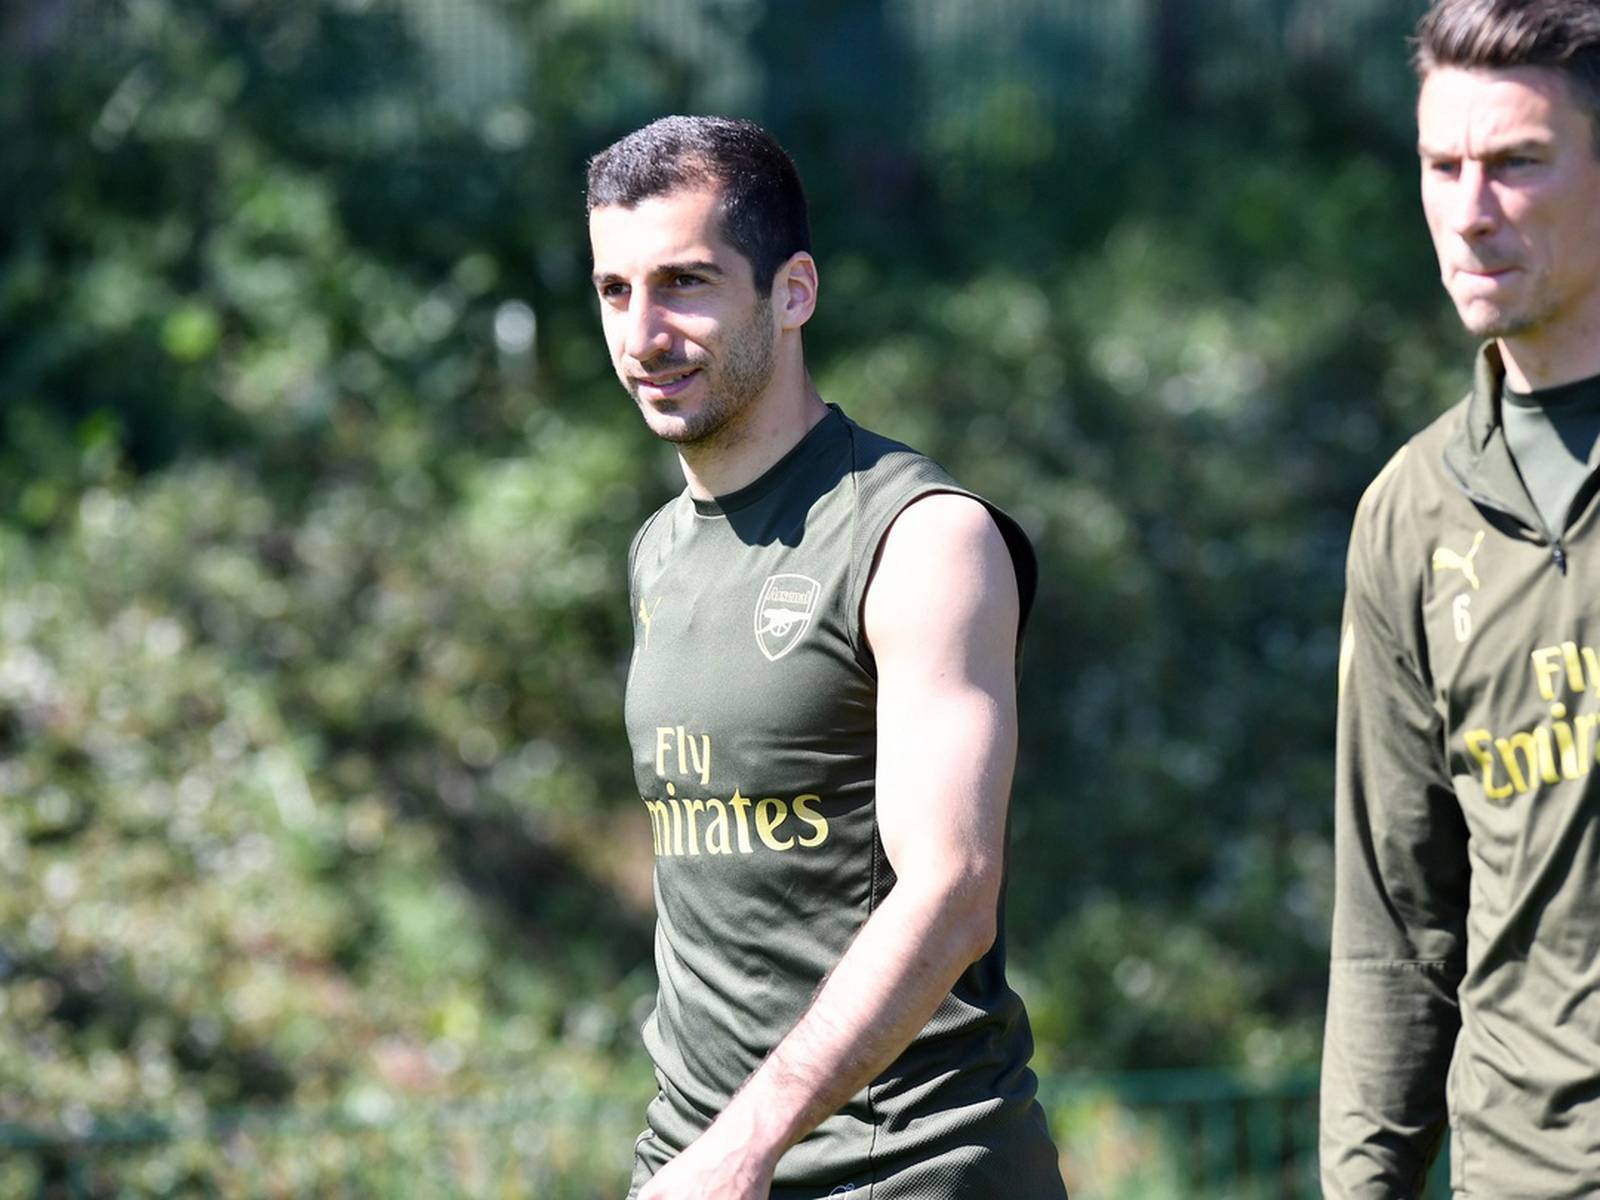 Mkhitaryan Europa League final: Arsenal midfielder will not travel